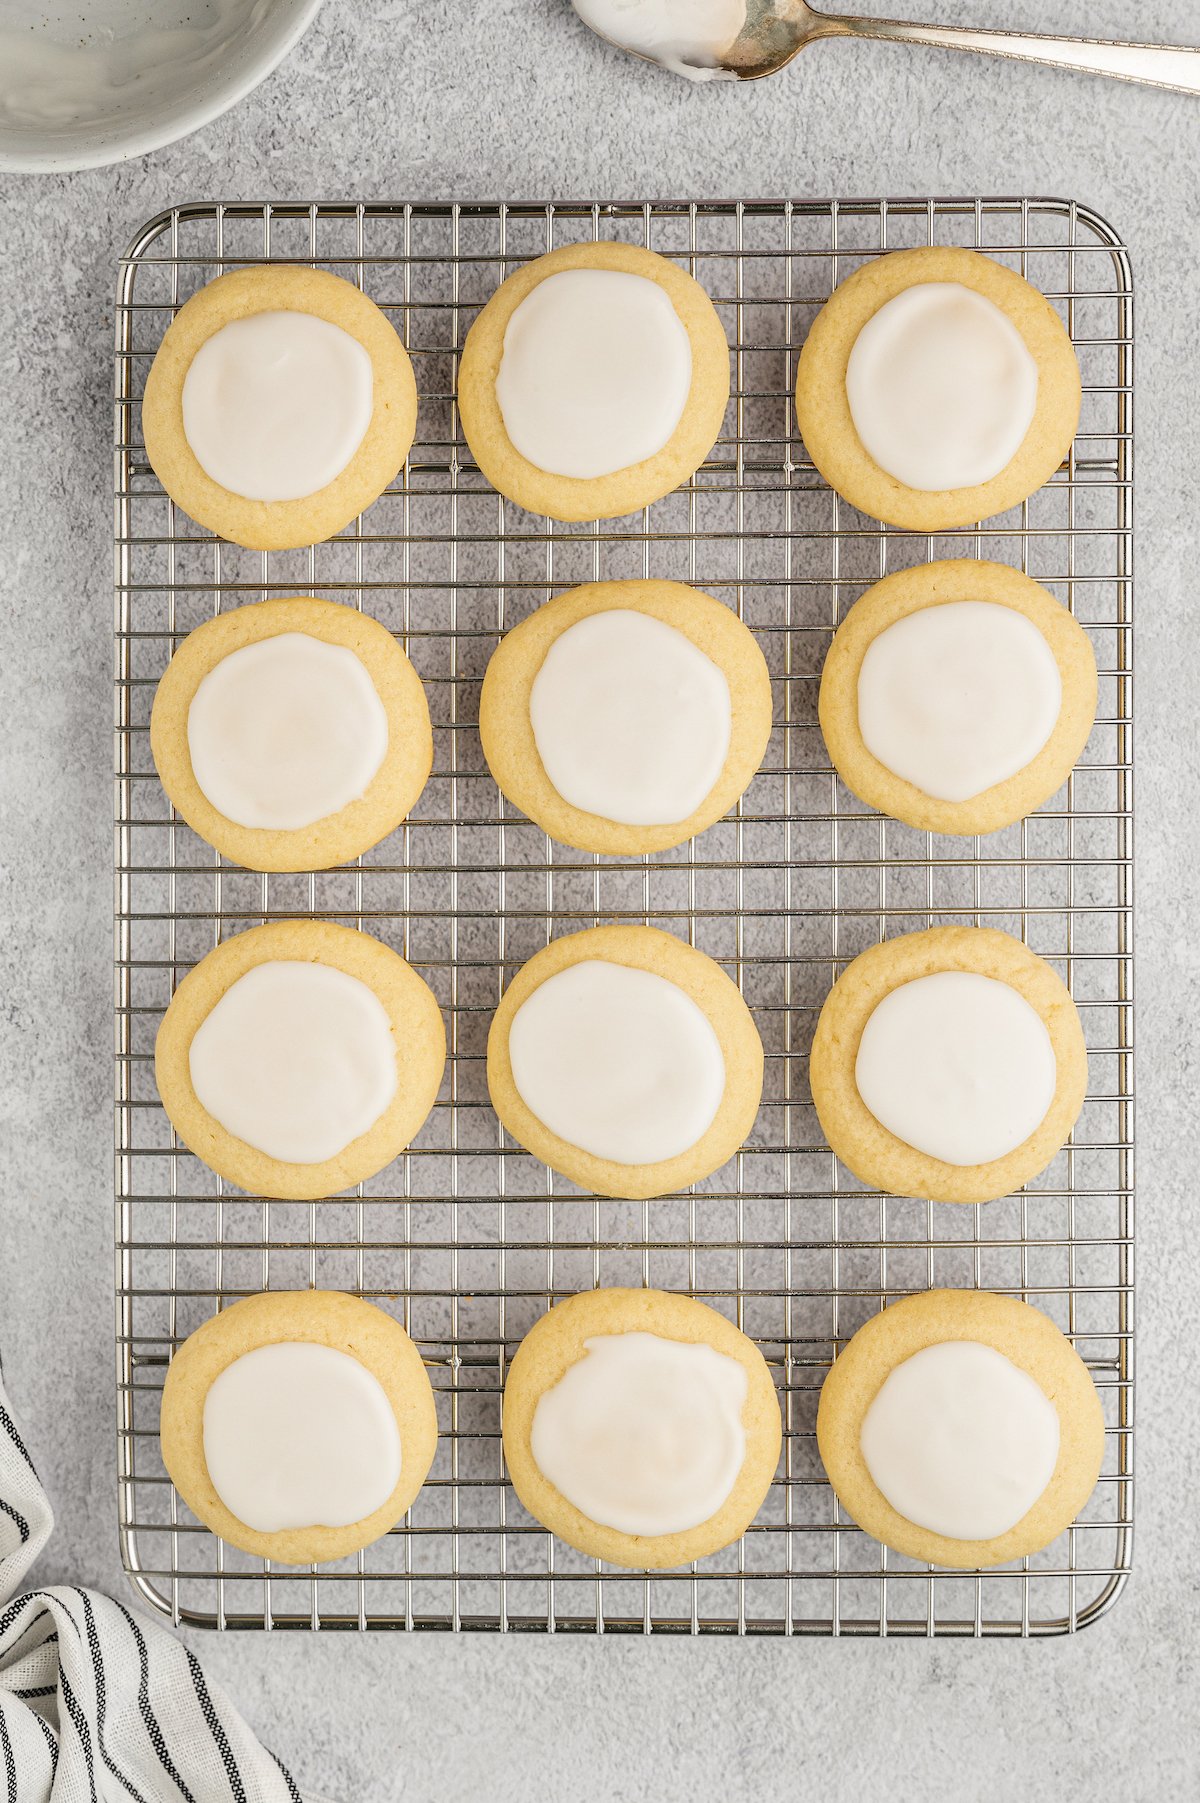 Glazed almond cookies on a rack.